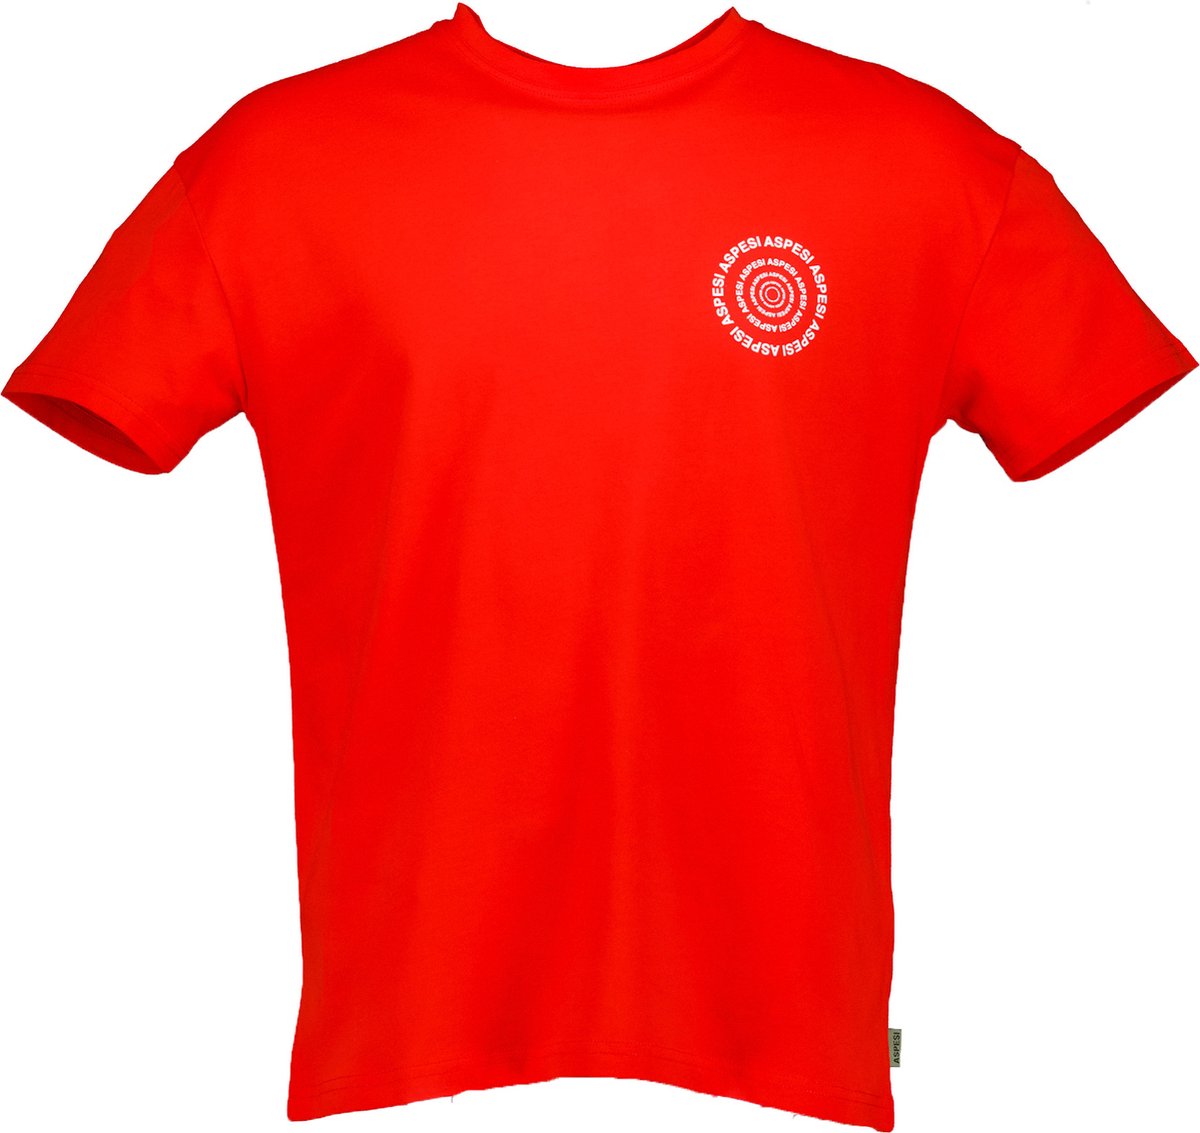 Aspesi Shirt Rood Katoen maat S Basic t-shirts rood